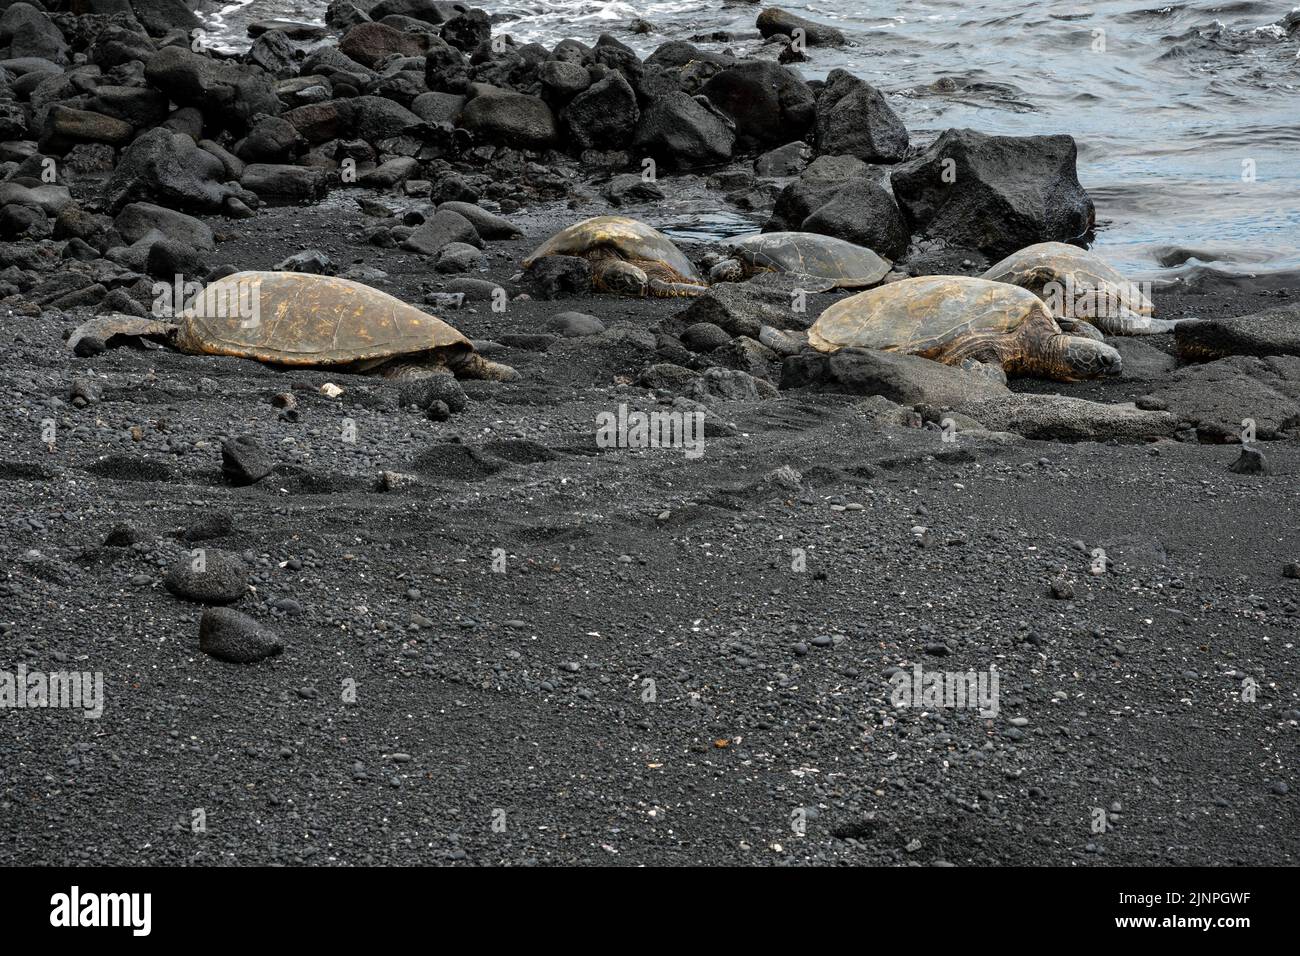 hawksbill sea turtles or eretmochelys imbricata emerging from ocean onto punaluu black sand beach Stock Photo